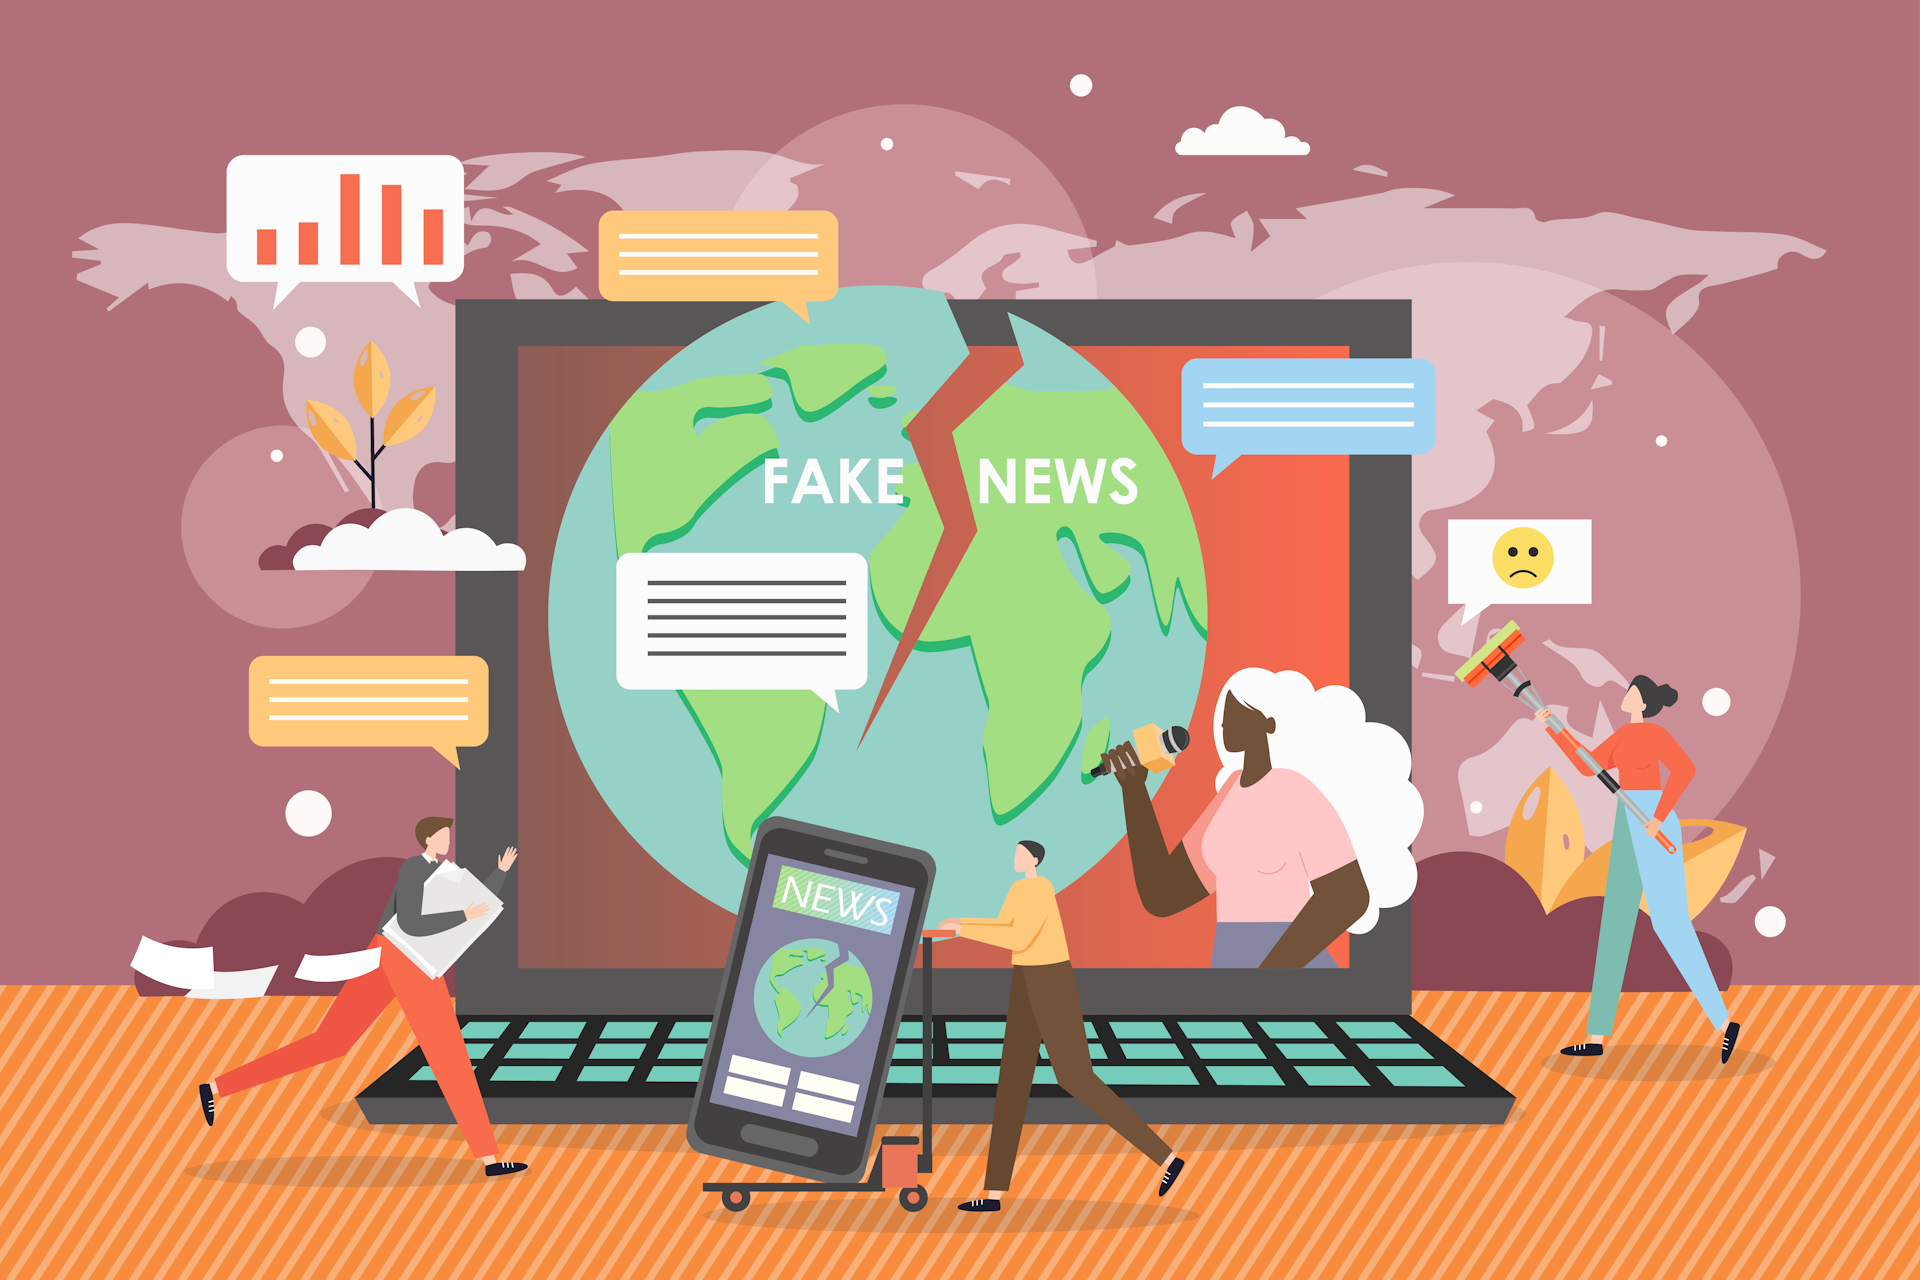 An illustration depicting Fake news